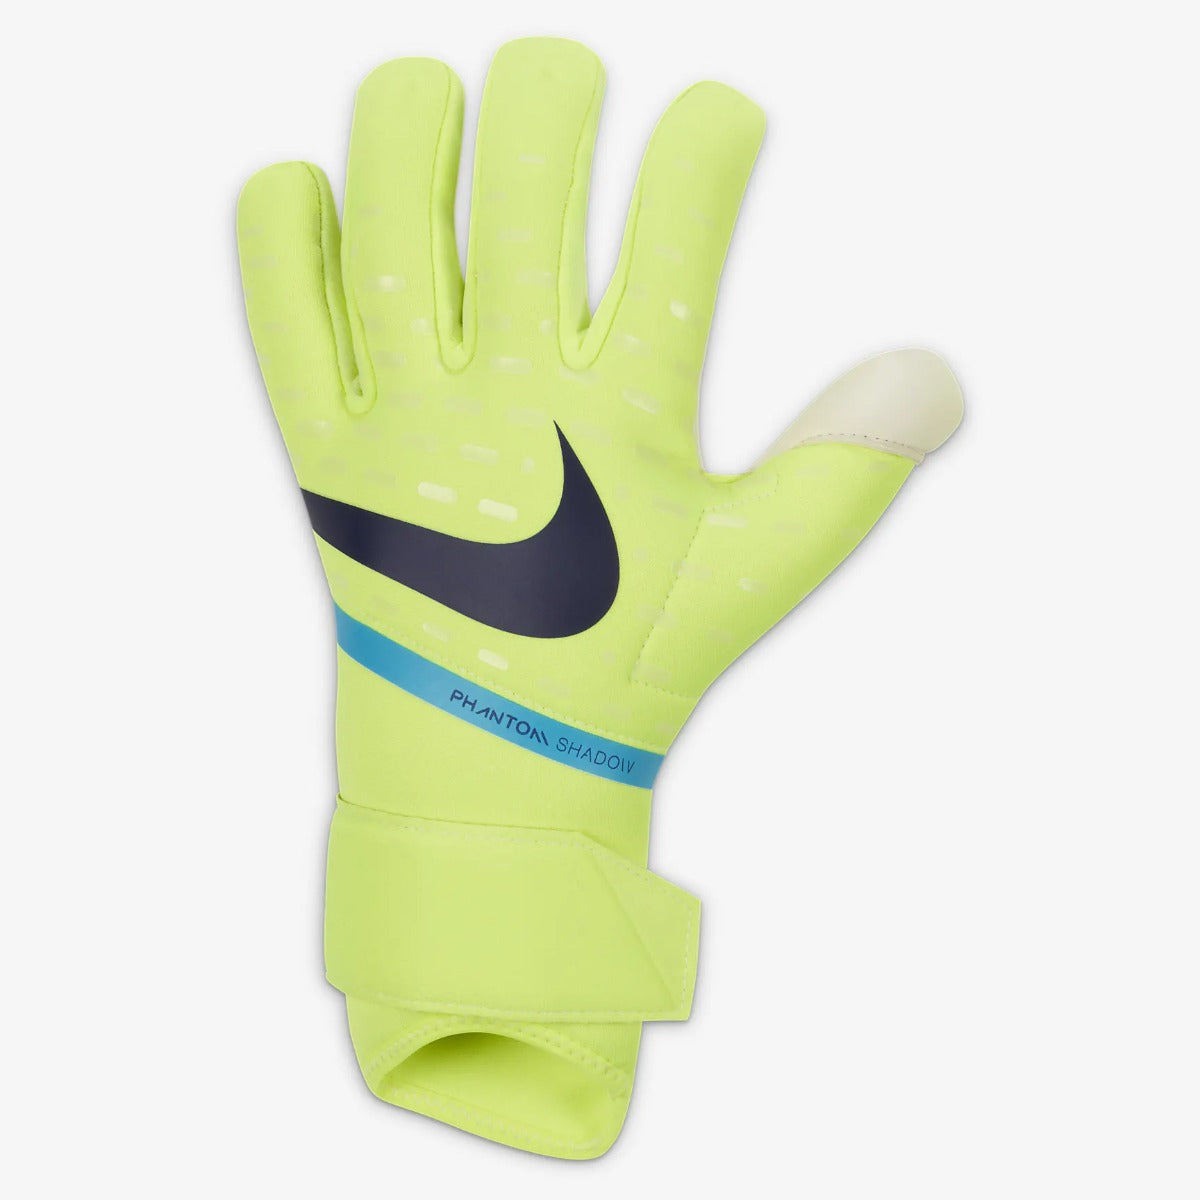 Nike Phantom Shadow Goalkeeper Gloves - Volt-Black-Blue (Single - Outer)